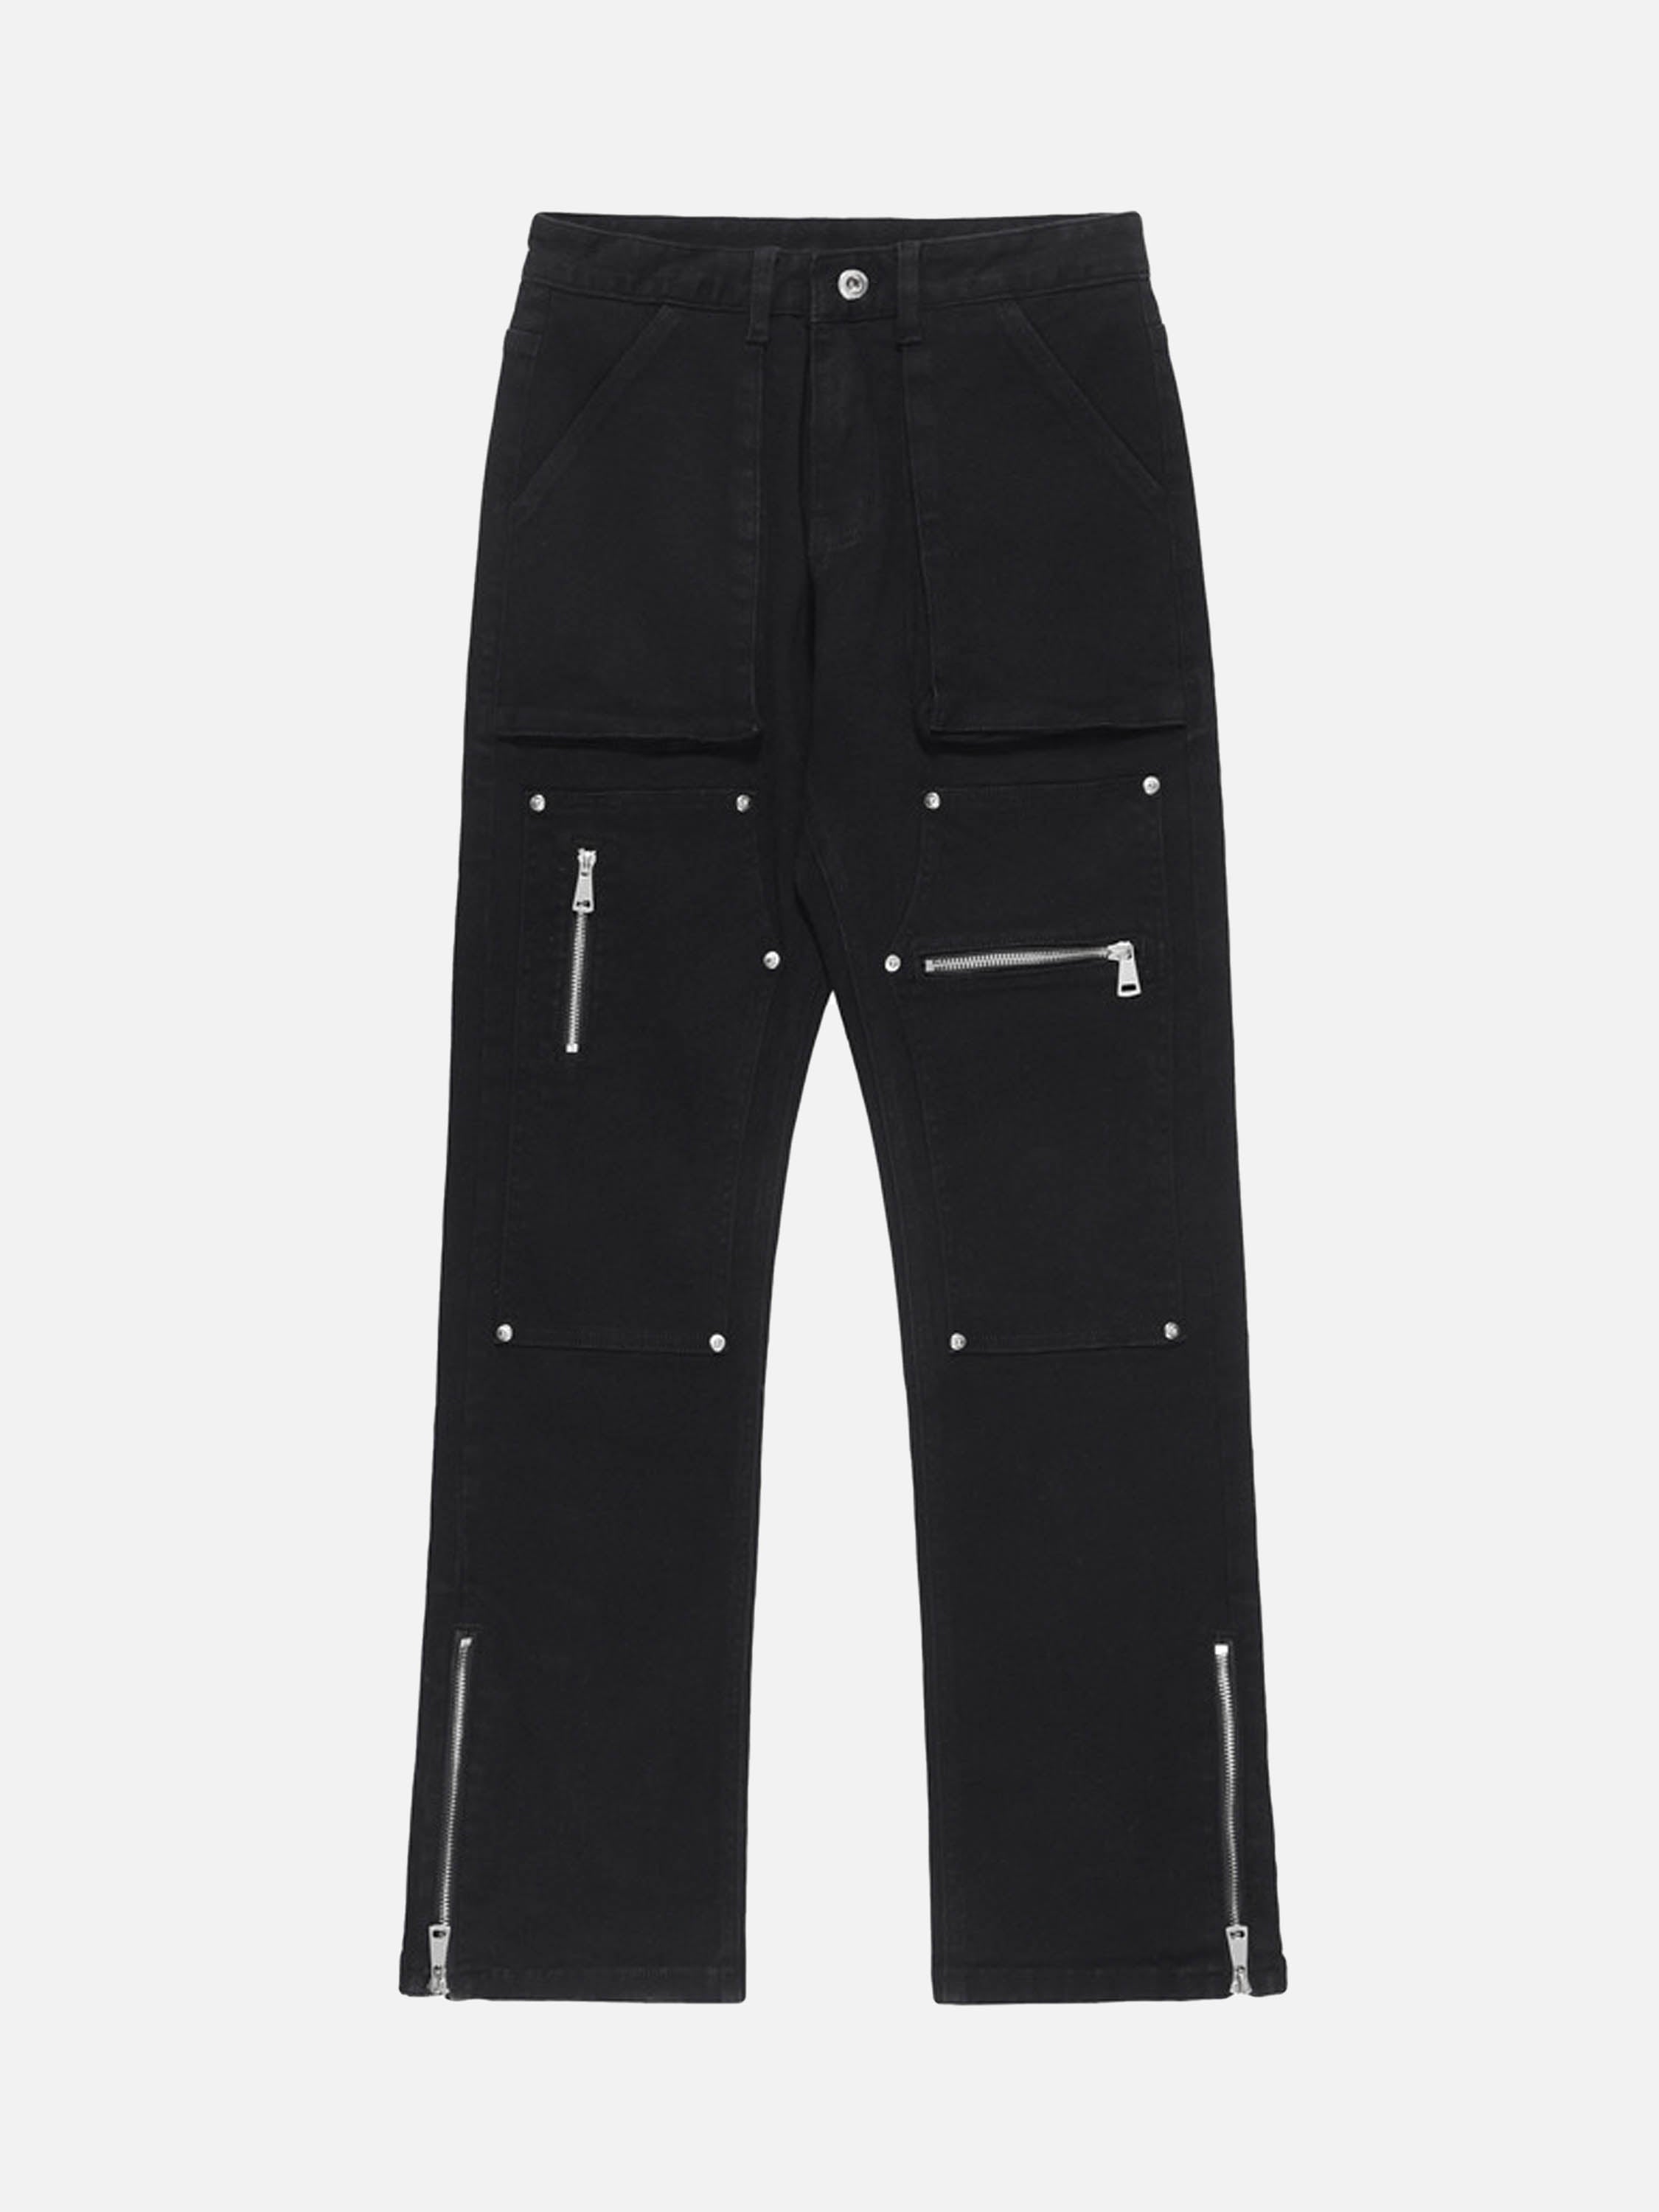 Thesupermade High Street Zipper Patchwork Pocket Denim Pants Straight